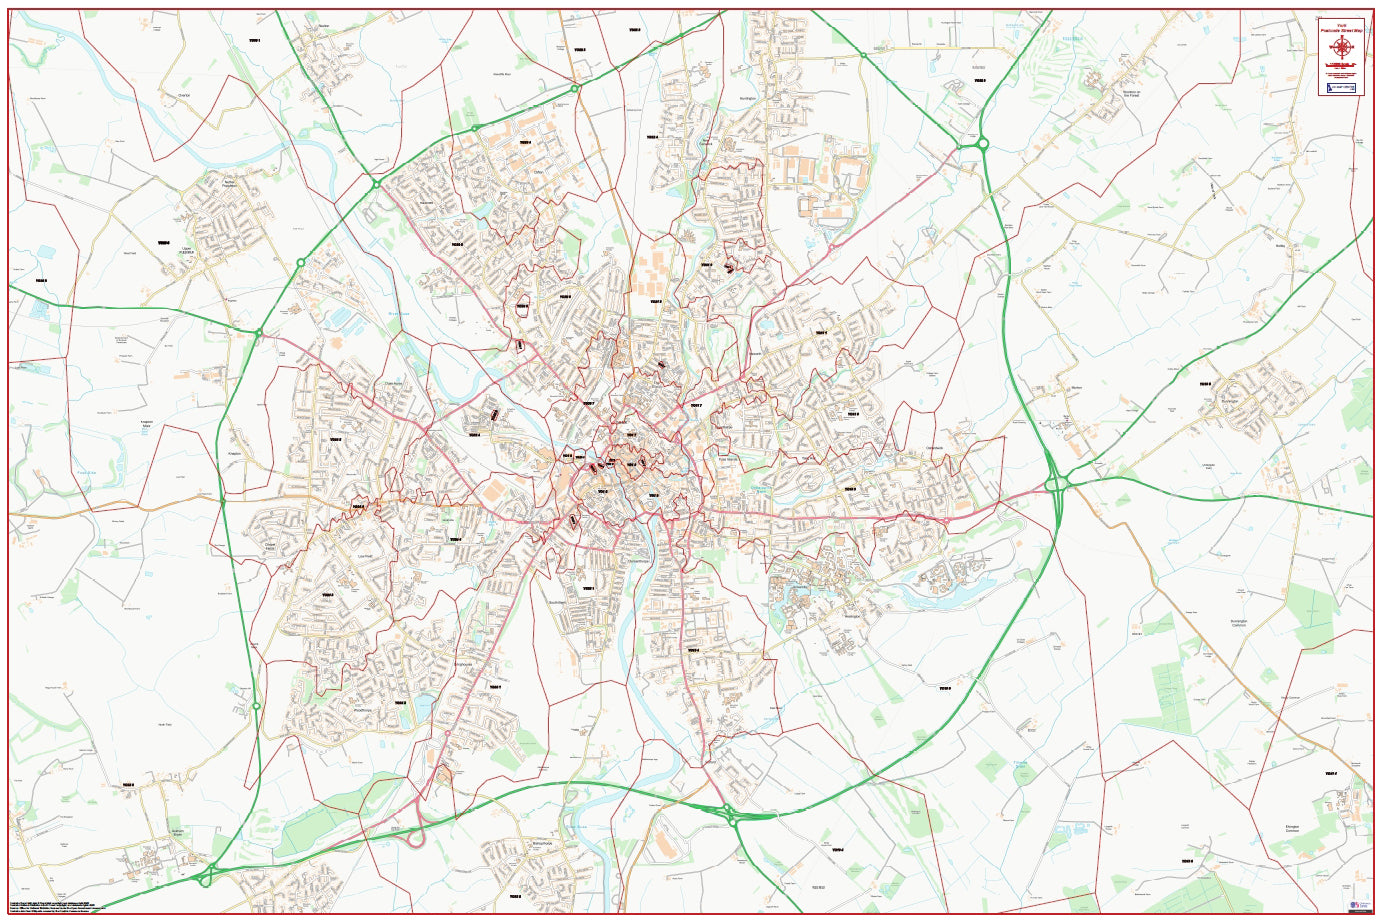 Central York Postcode City Street Map - Digital Download